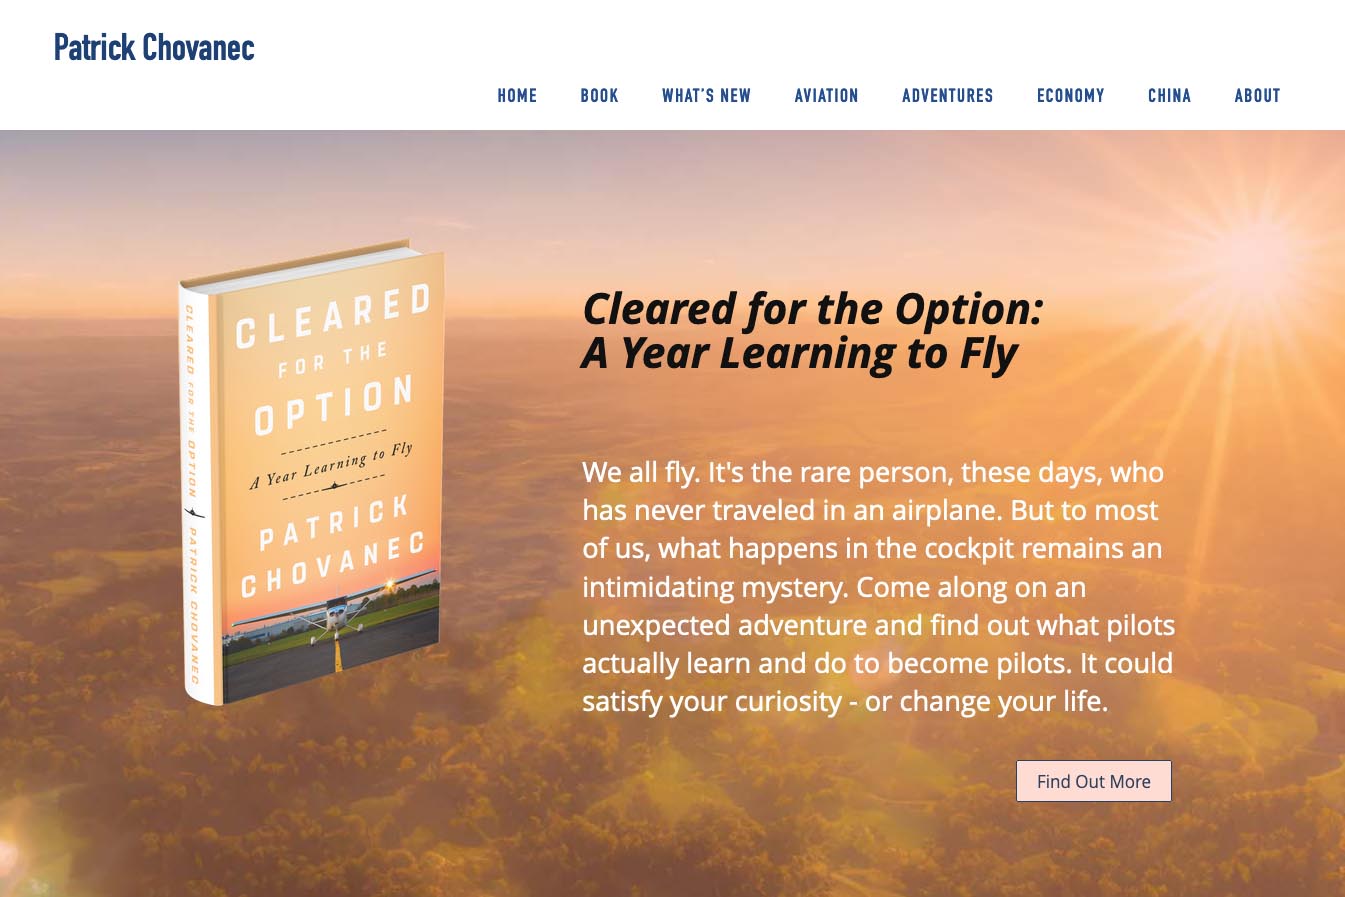 Bespoke website design for an economic advisor and author - Patrick Chovanec